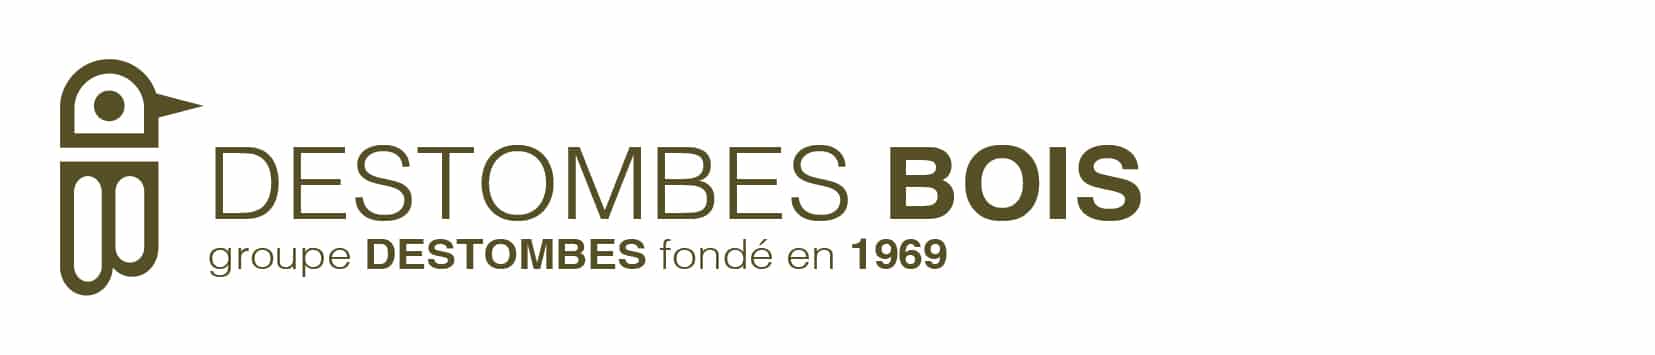 Logo Groupe Destombes Bois